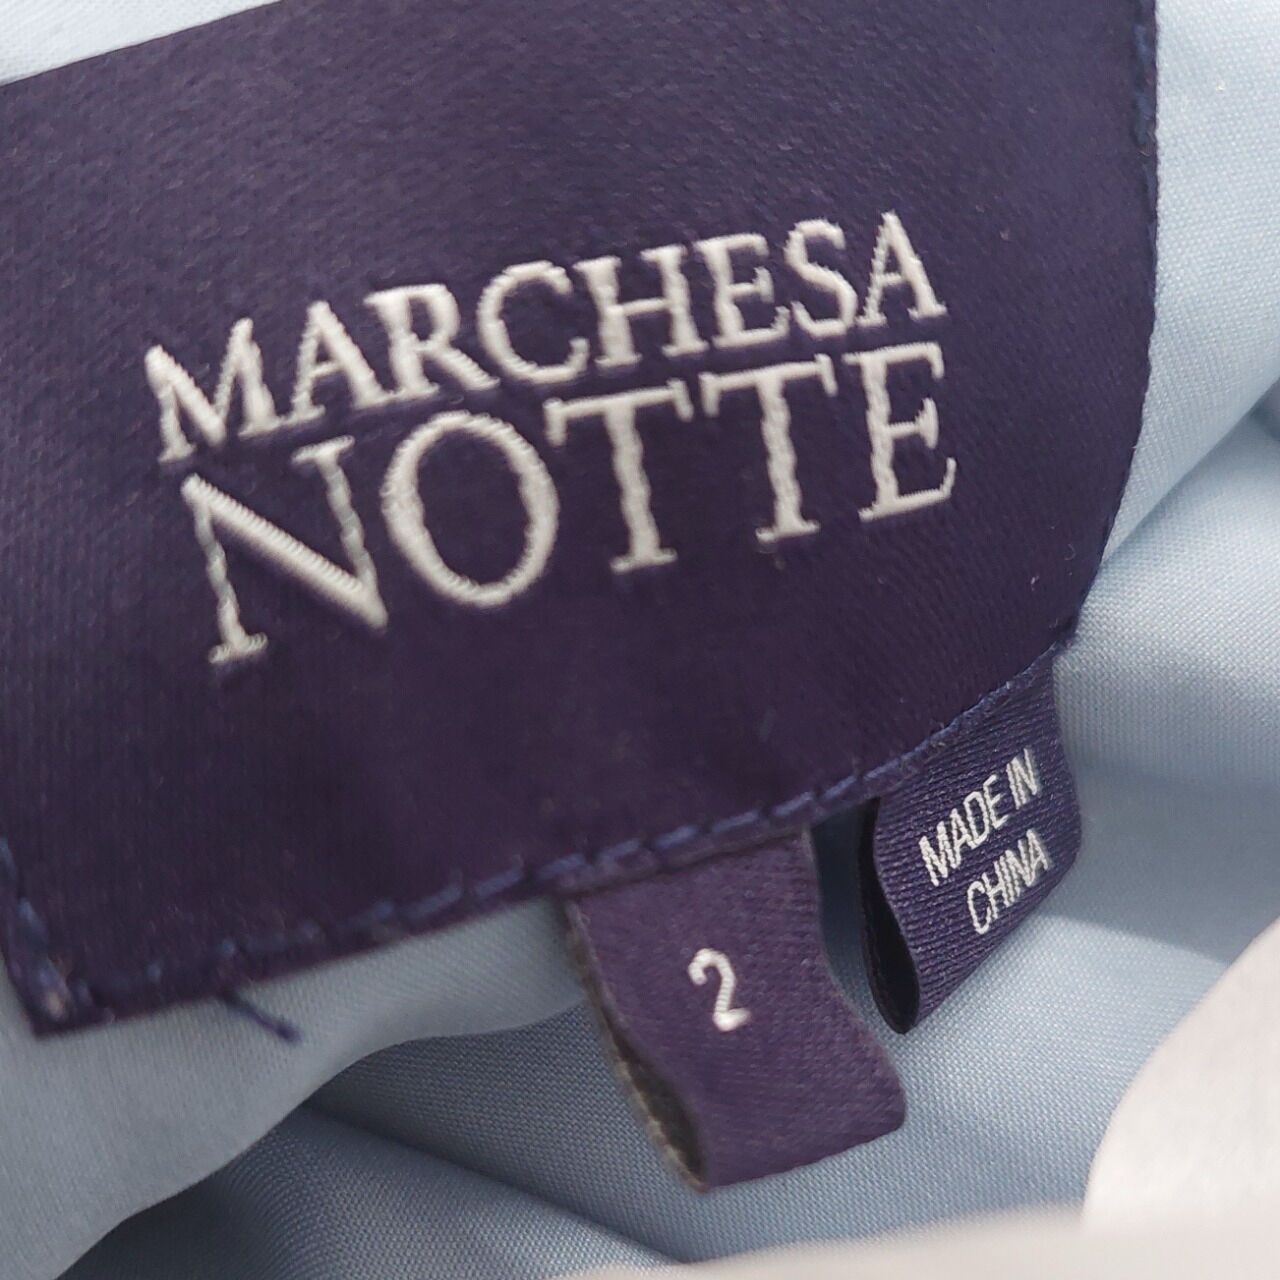 Marchesa Notte Sea Blue Long Dress